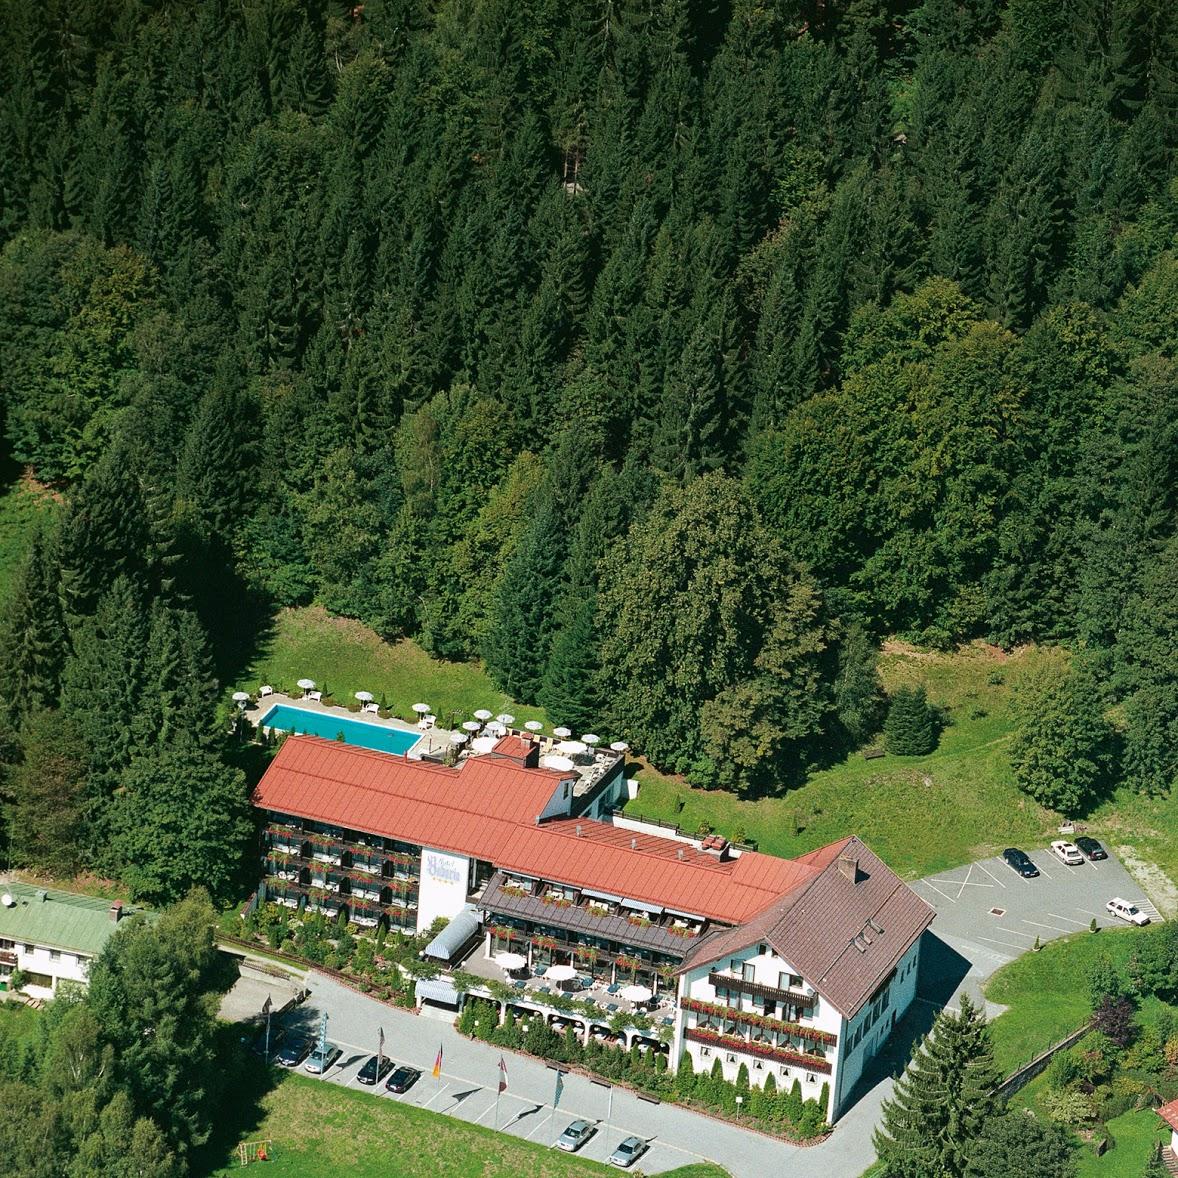 Restaurant "Hotel Bavaria E. Reubel e.K." in Zwiesel